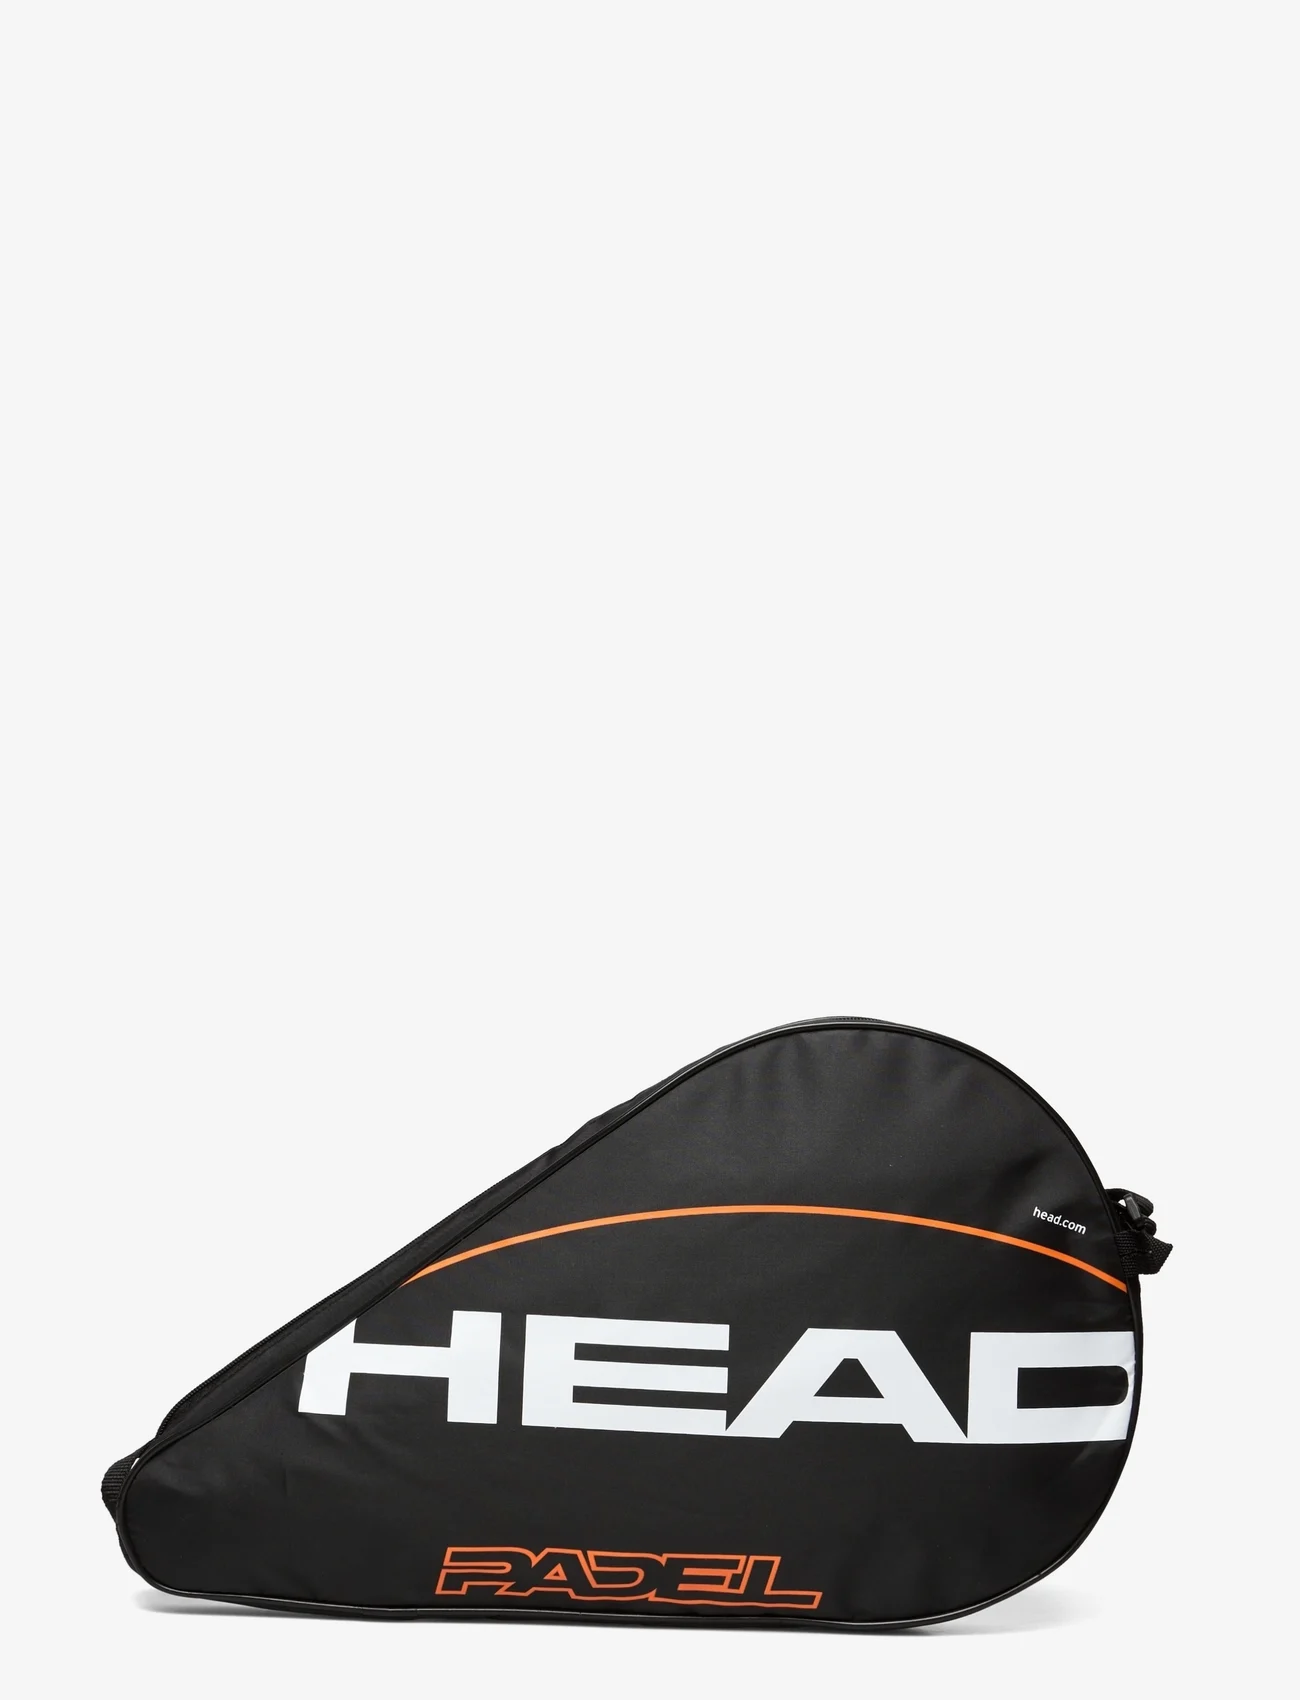 Head - Paddle CCT Full Size Coverbag - mailapelilaukut - black - 1